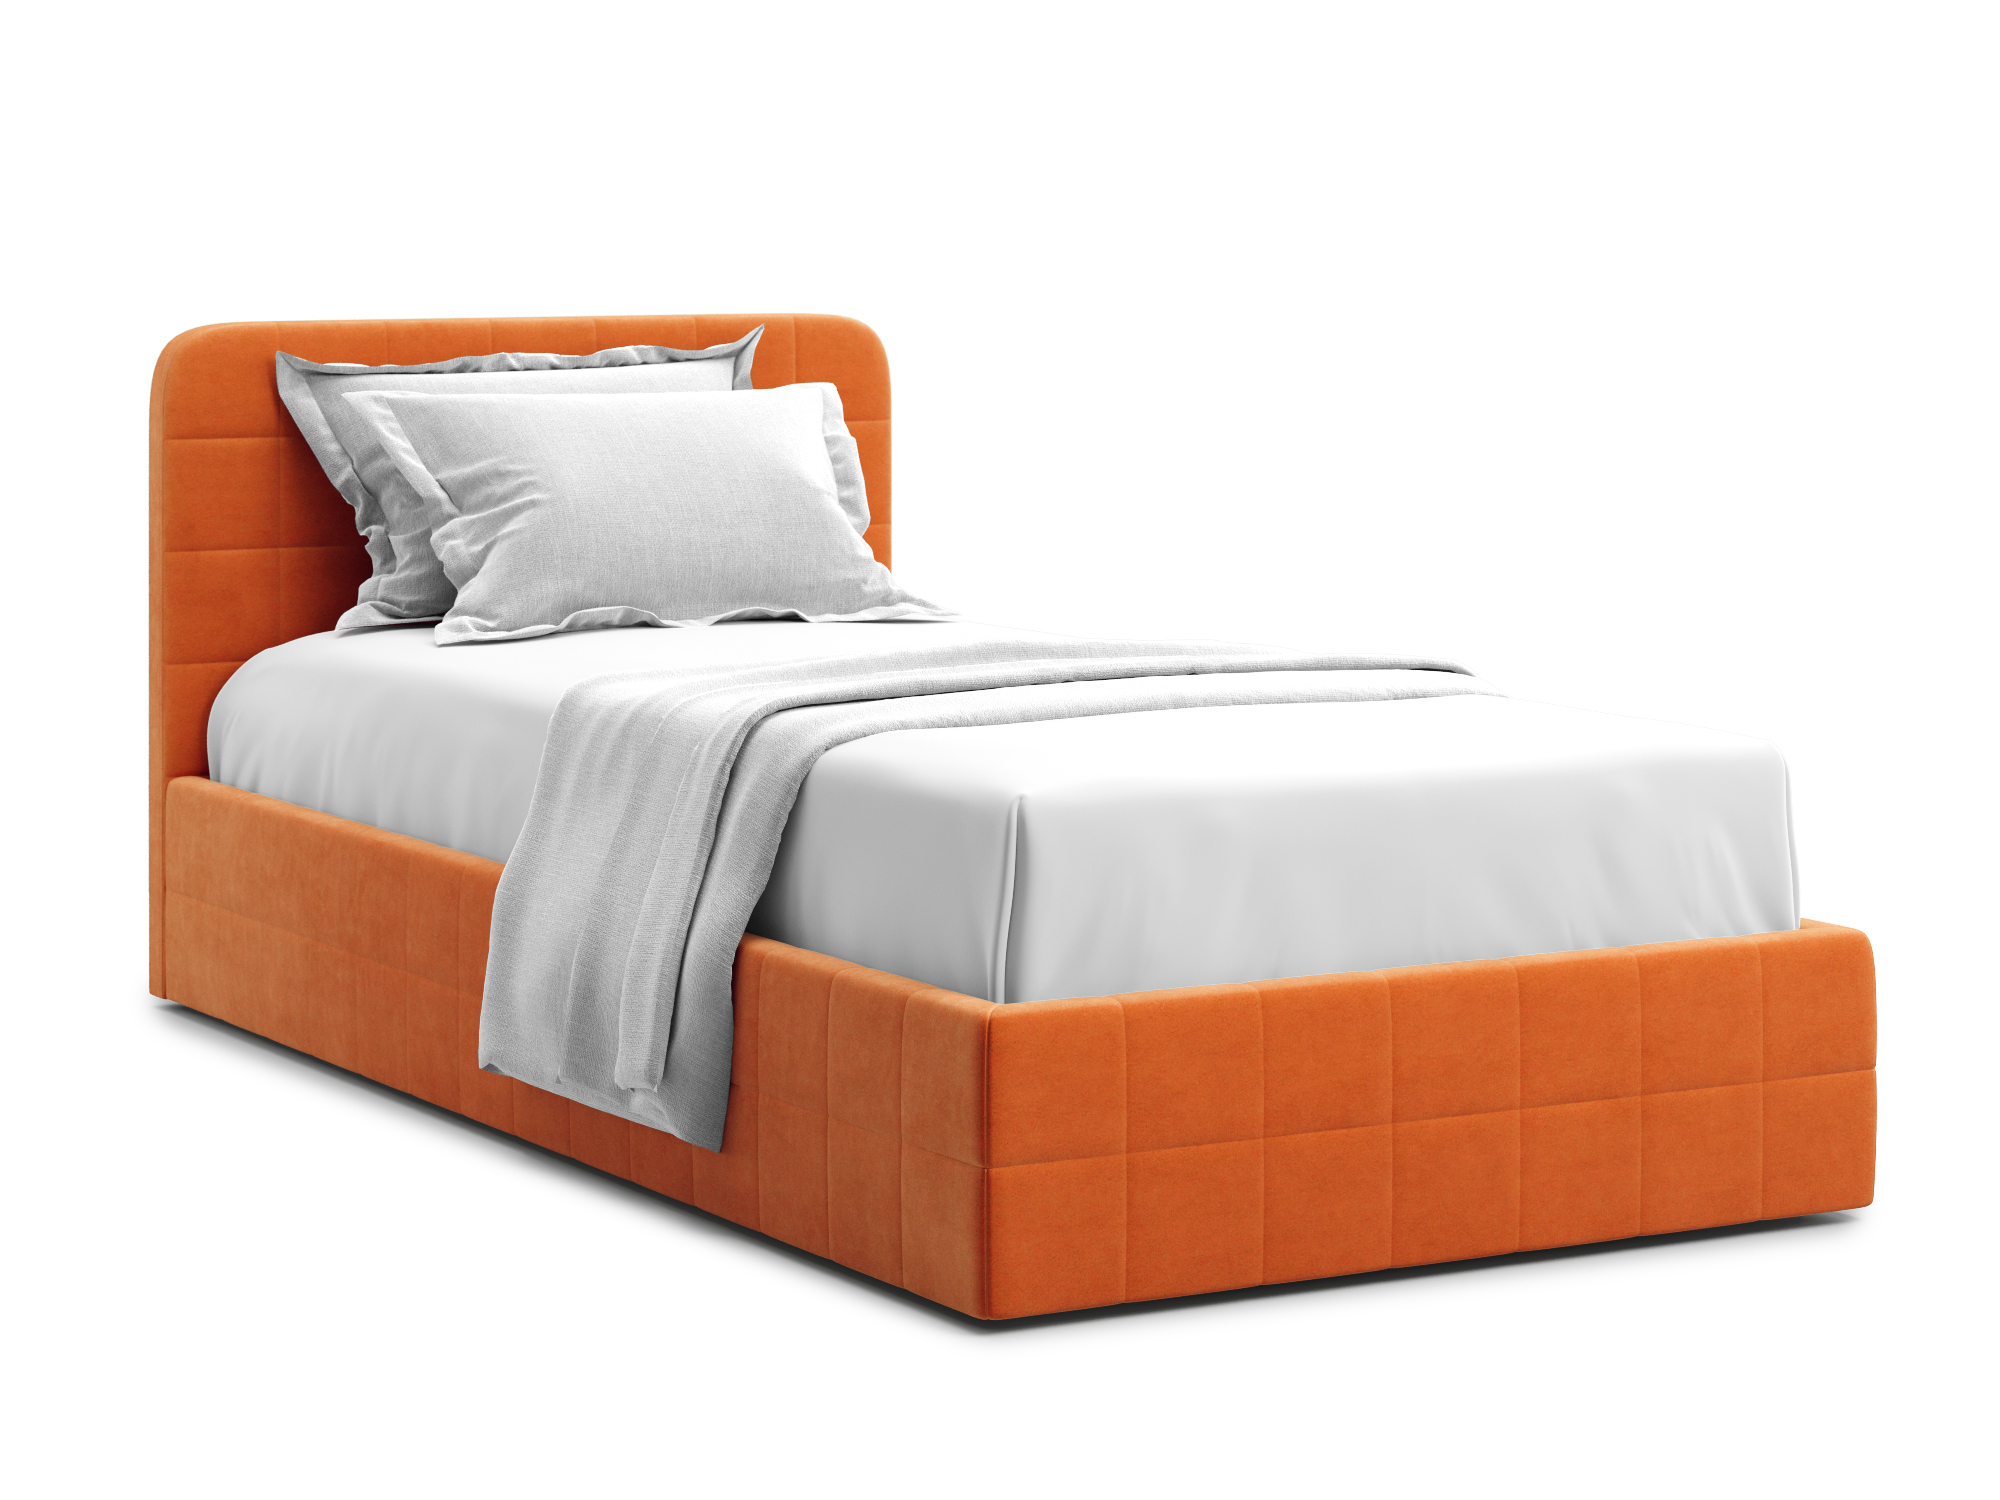 Кровать Adda 90 Velutto 27 Оранжевый, Массив, ДСП кровать adda 90 velutto 14 ментоловый массив дсп